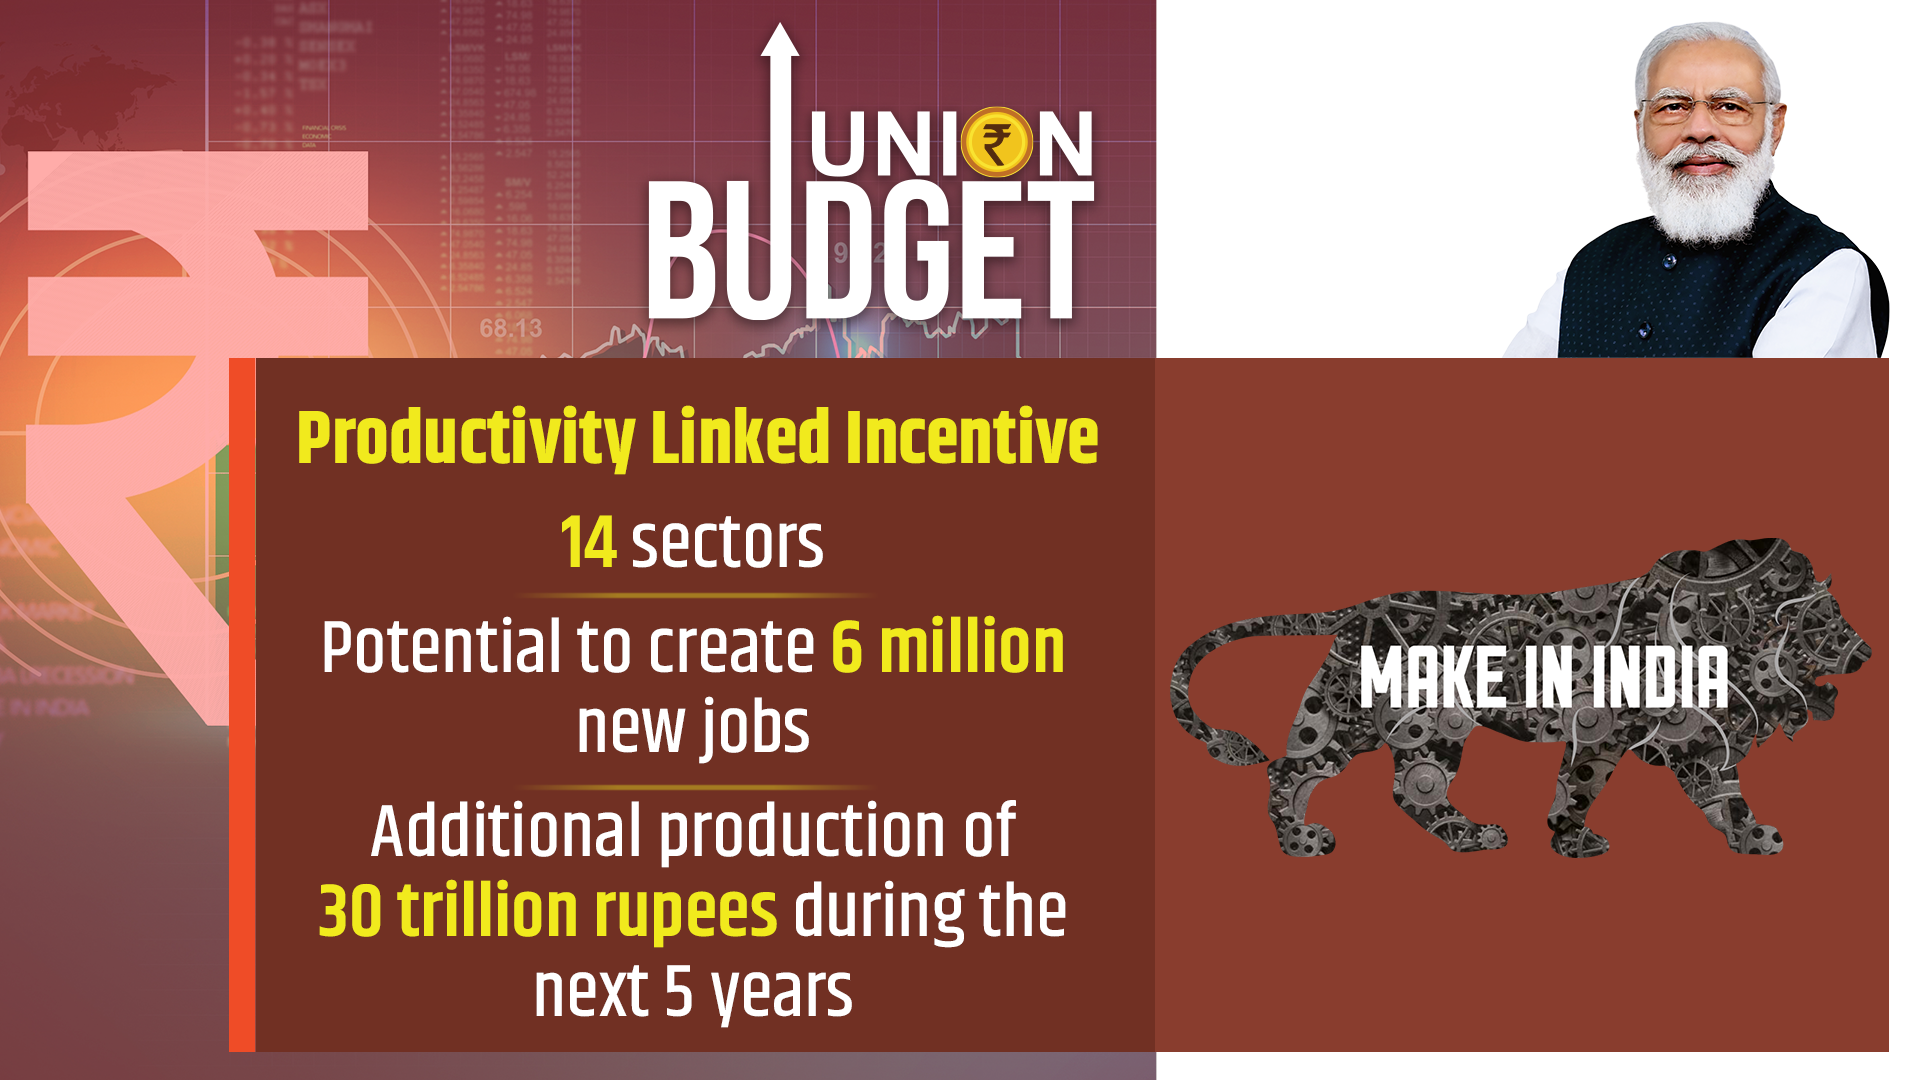 Union Budget of India 2022